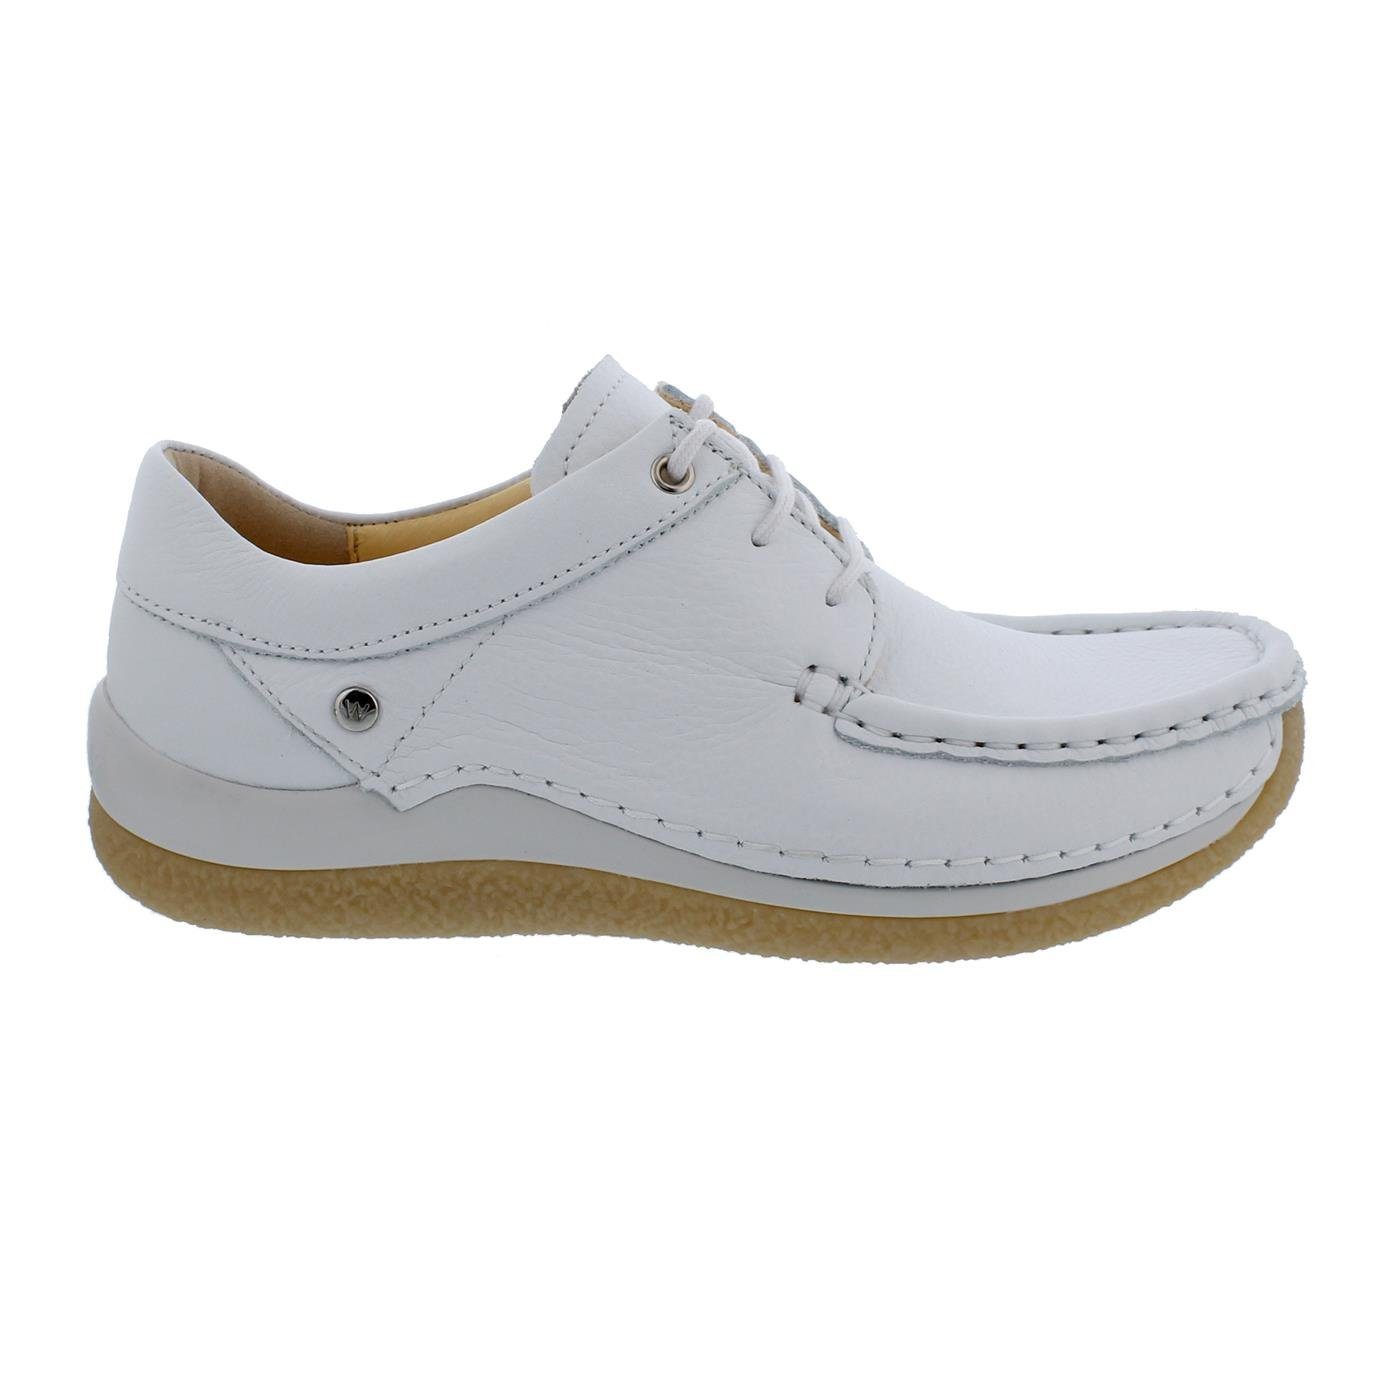 WOLKY Celebration Sneaker, Nappa leather, White, 0452520-100 Schnürschuh